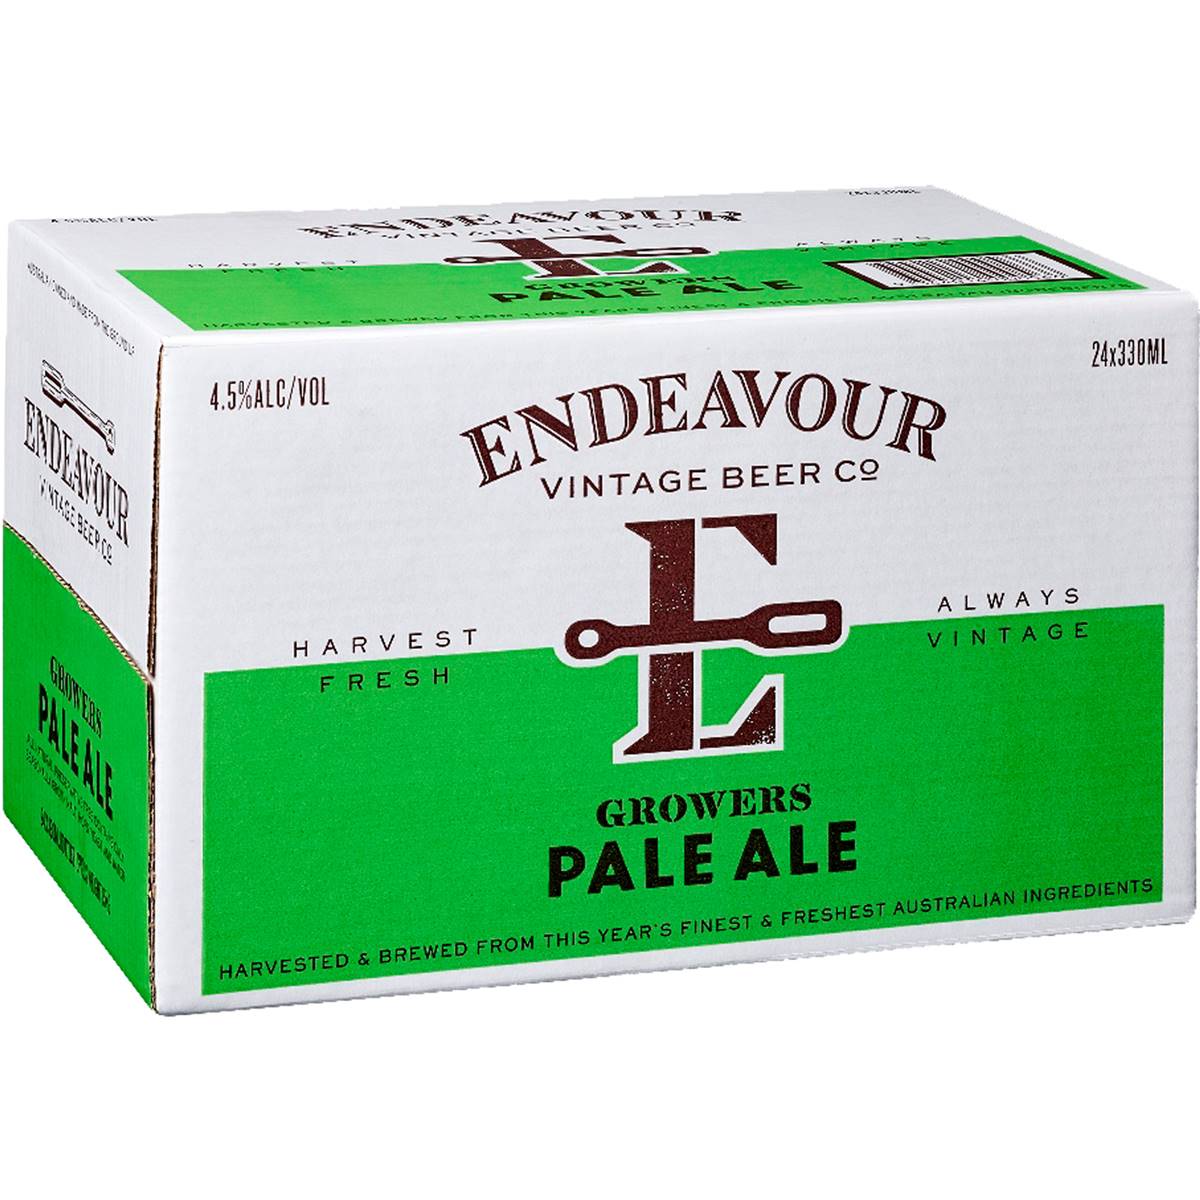 Endeavour Vintage Beer Co. Growers Pale Ale Bottles